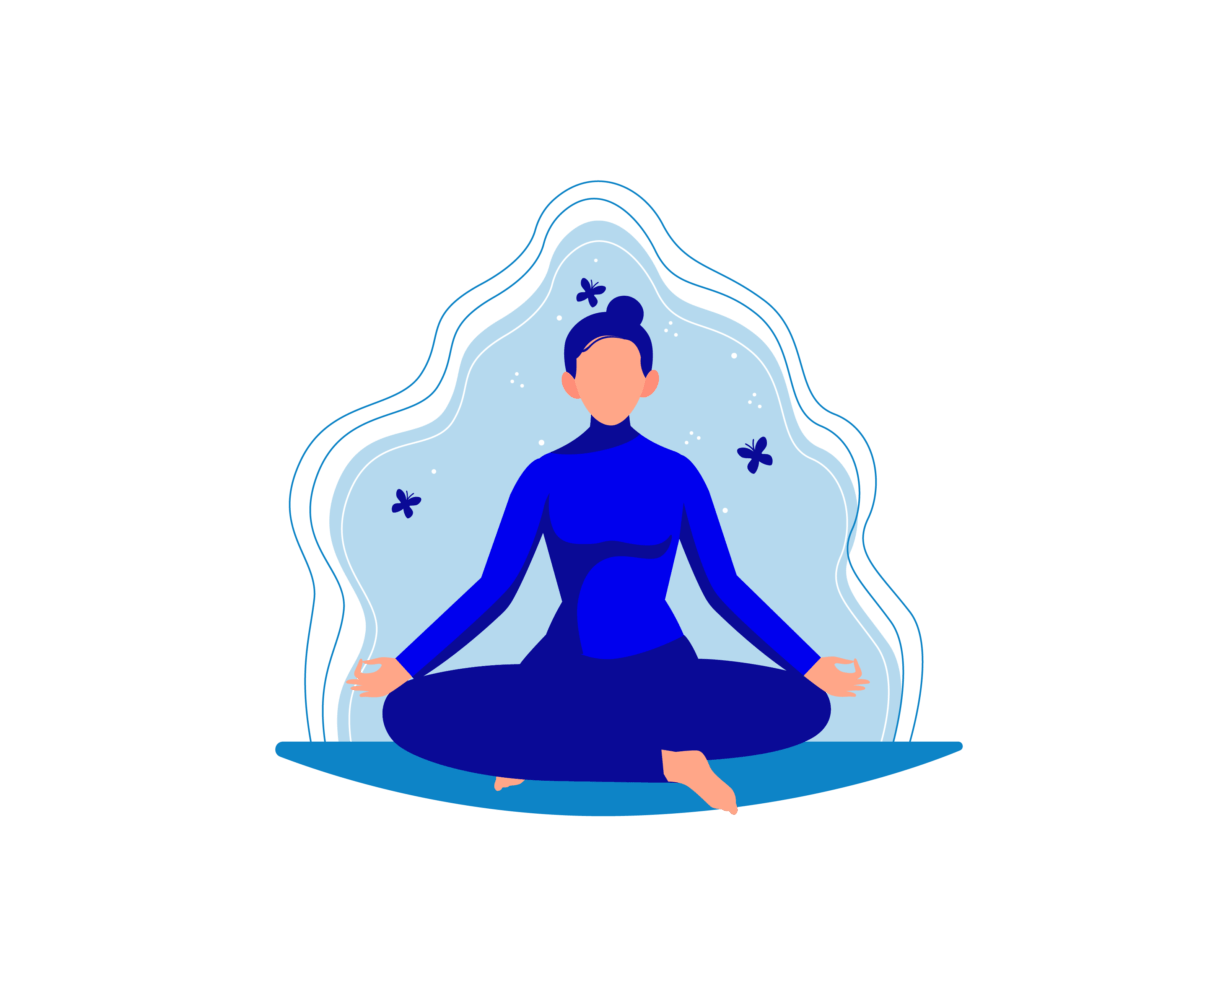 Illustration of person meditating wearing blue.